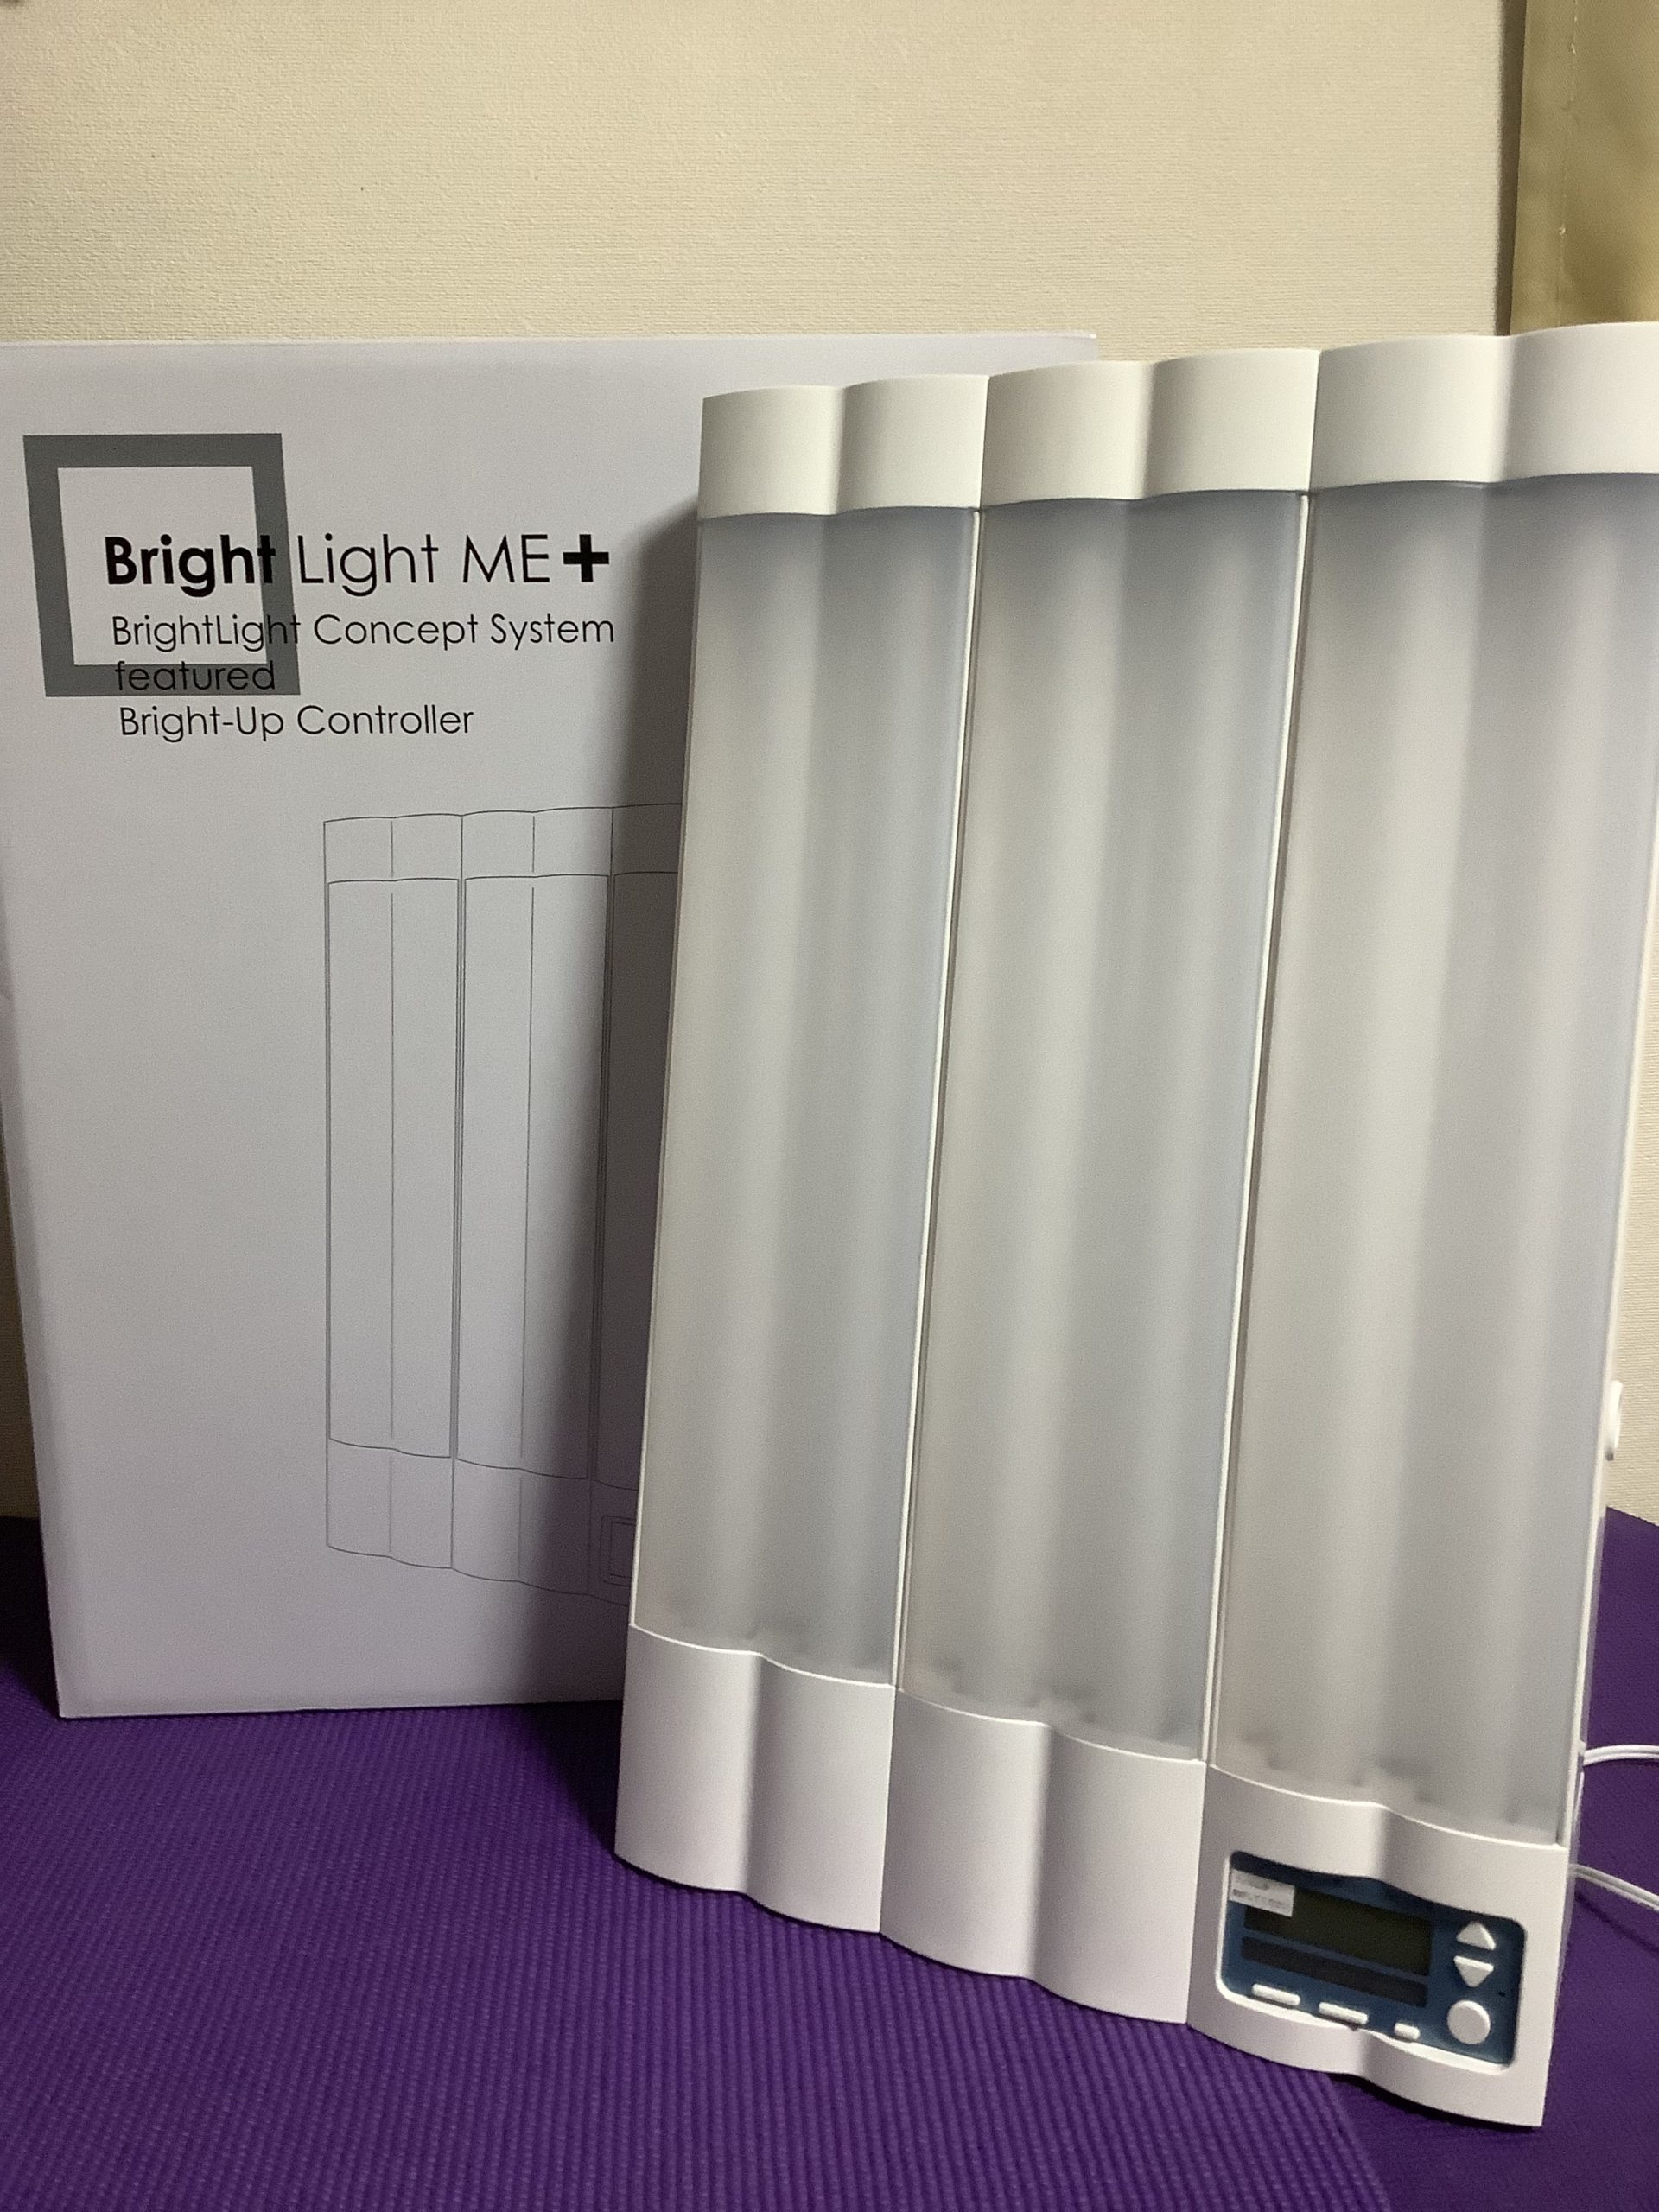 Bright Light ME+ ブライトライト 取扱説明書あり - リラクゼーション